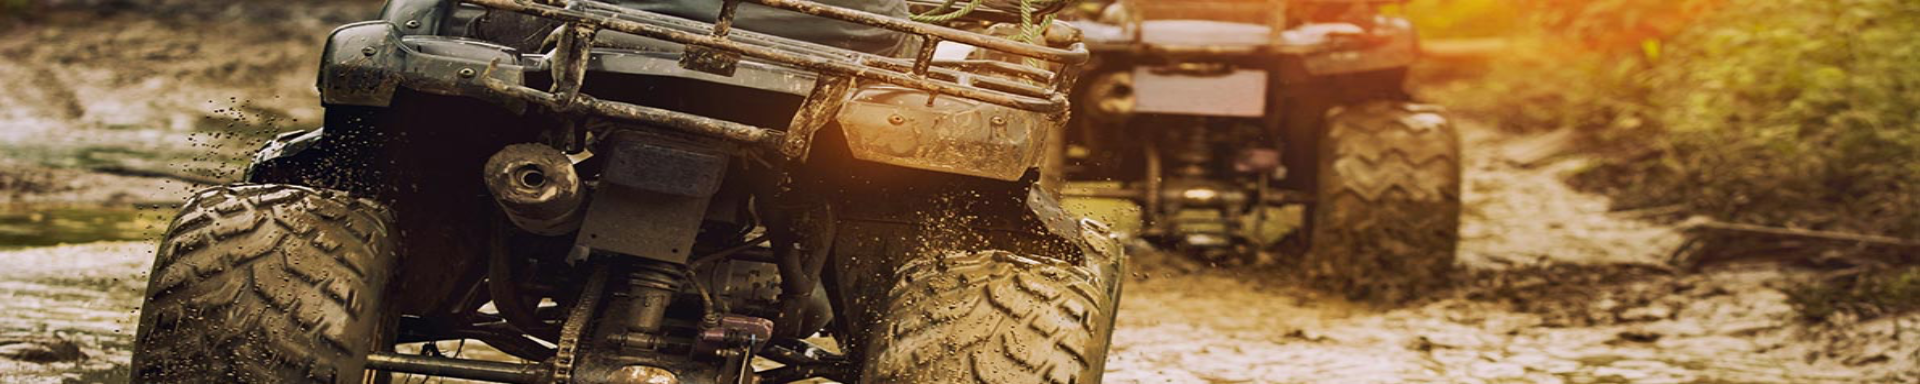 All Terrain Vehicle (ATV) Batteries | RogueFuel.ca | Munro Industries rf-100703091101